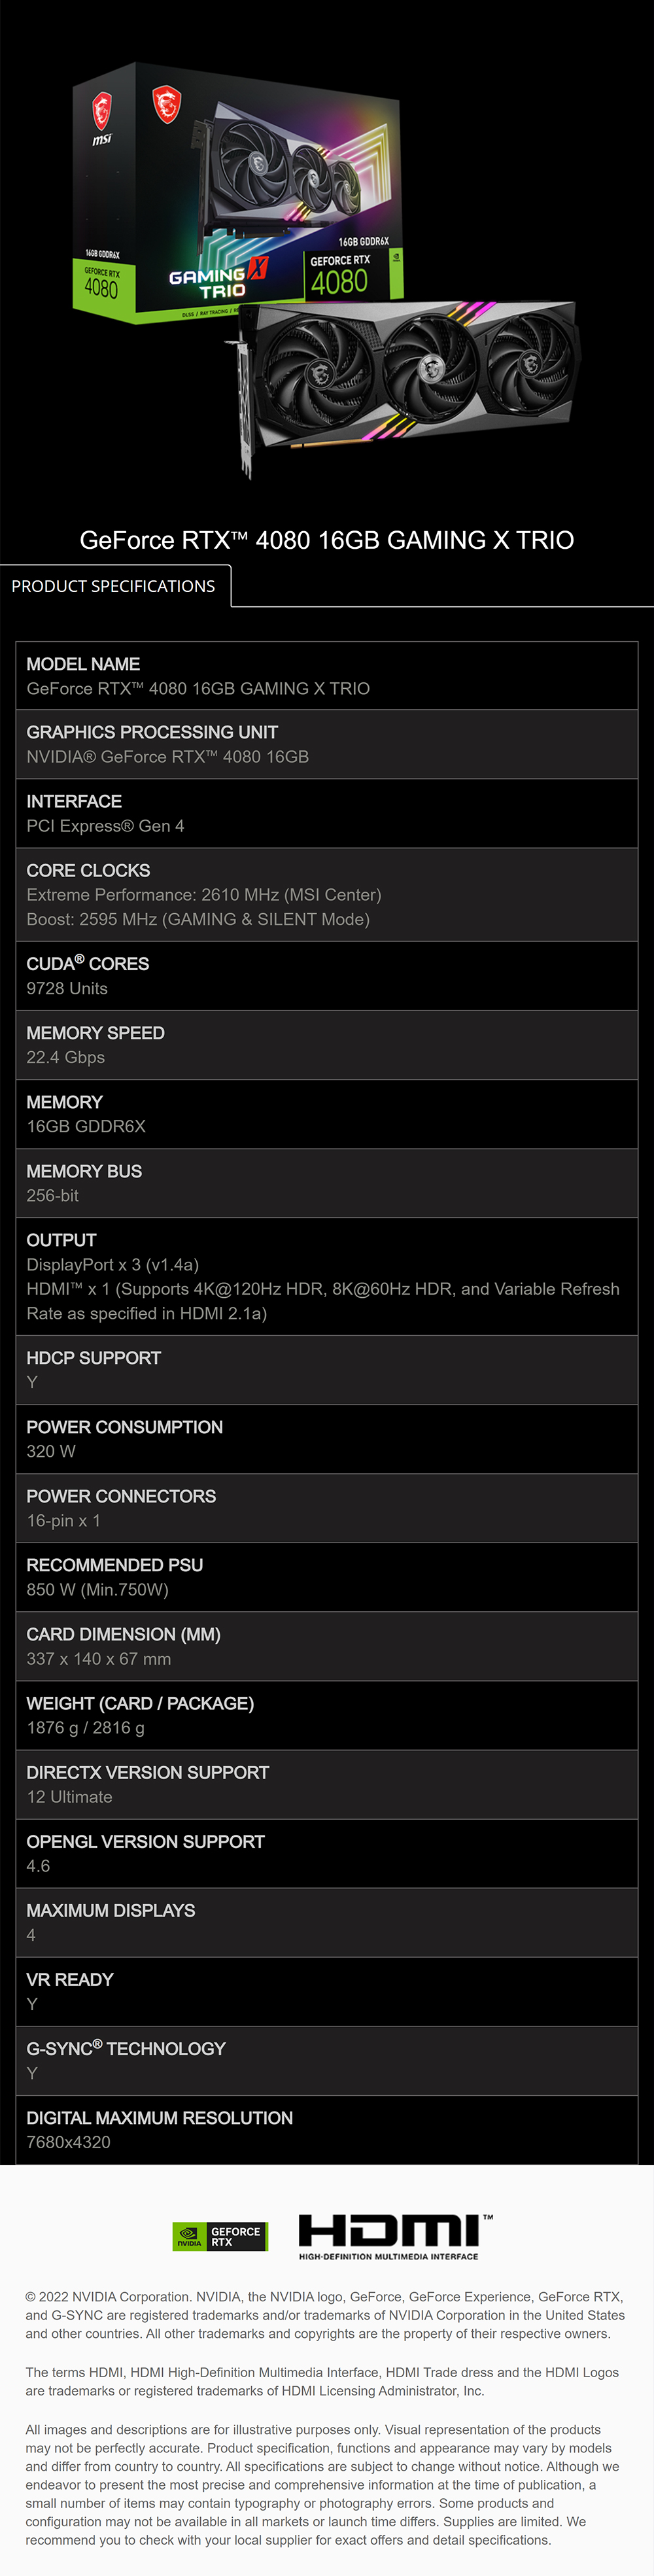 Spec GeForce RTX 4080 16GB GAMING X TRIO